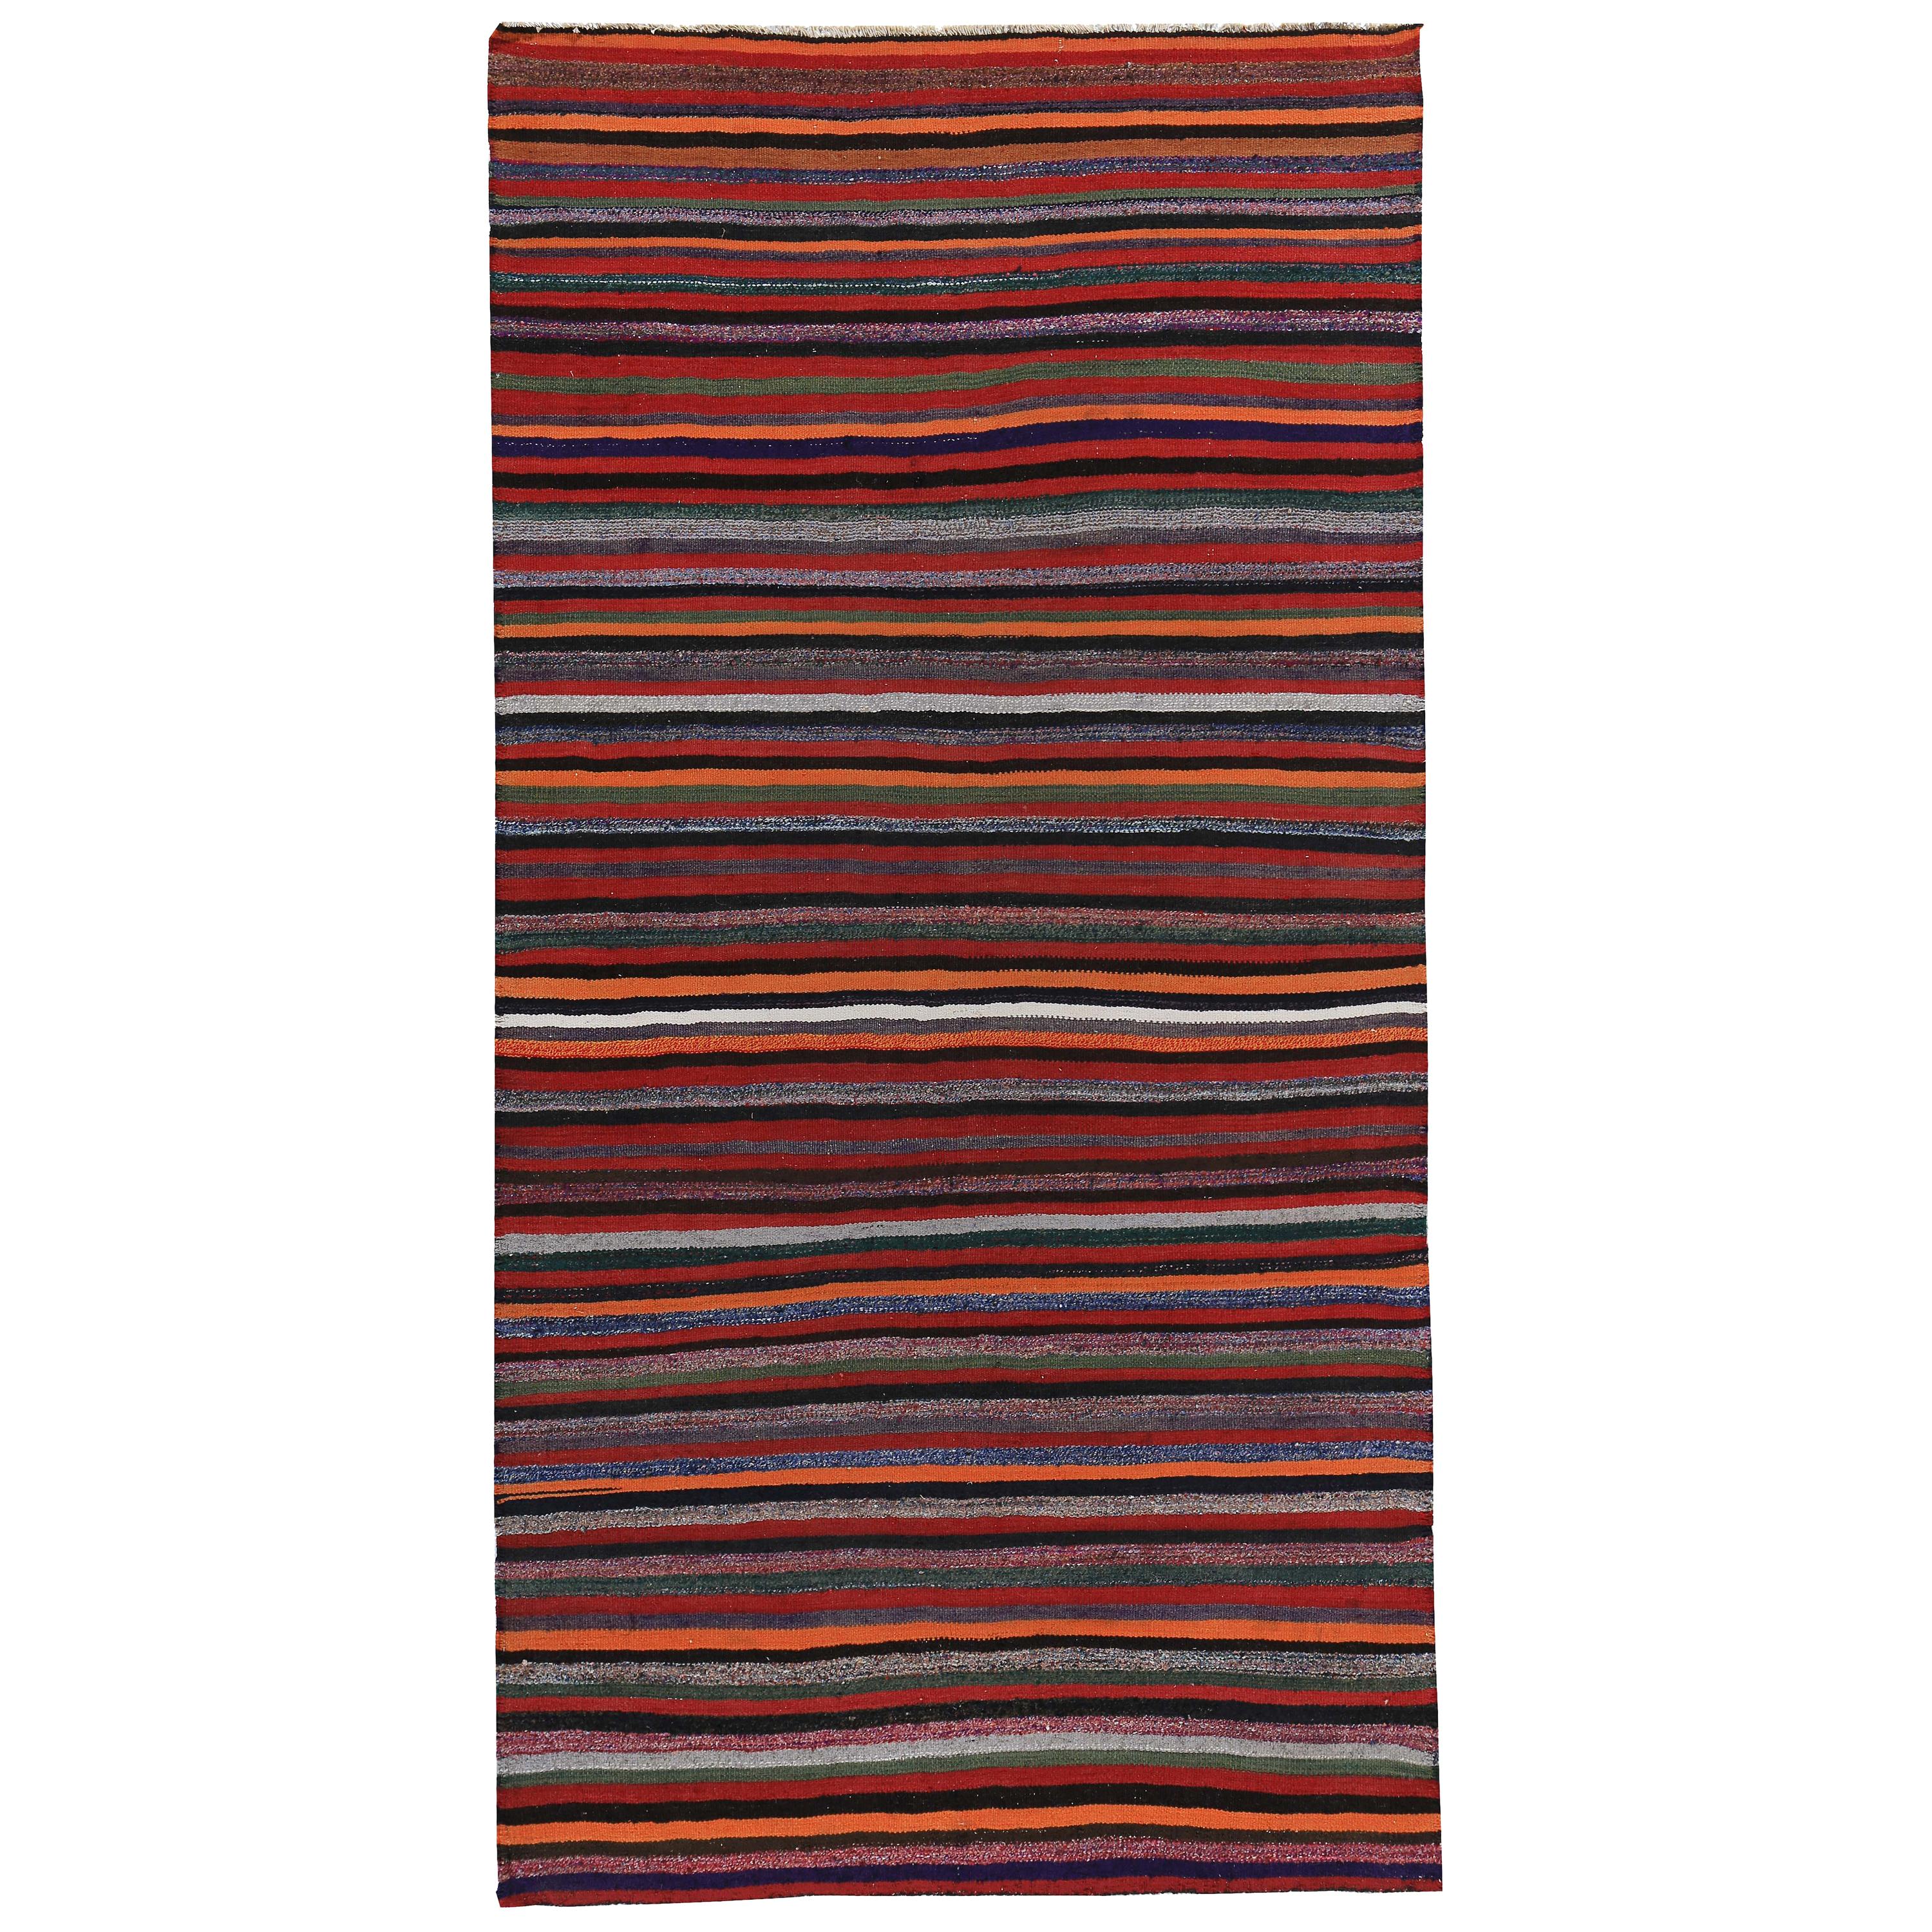 Turkish Kilim Rug with Multicolored Tribal Stripes